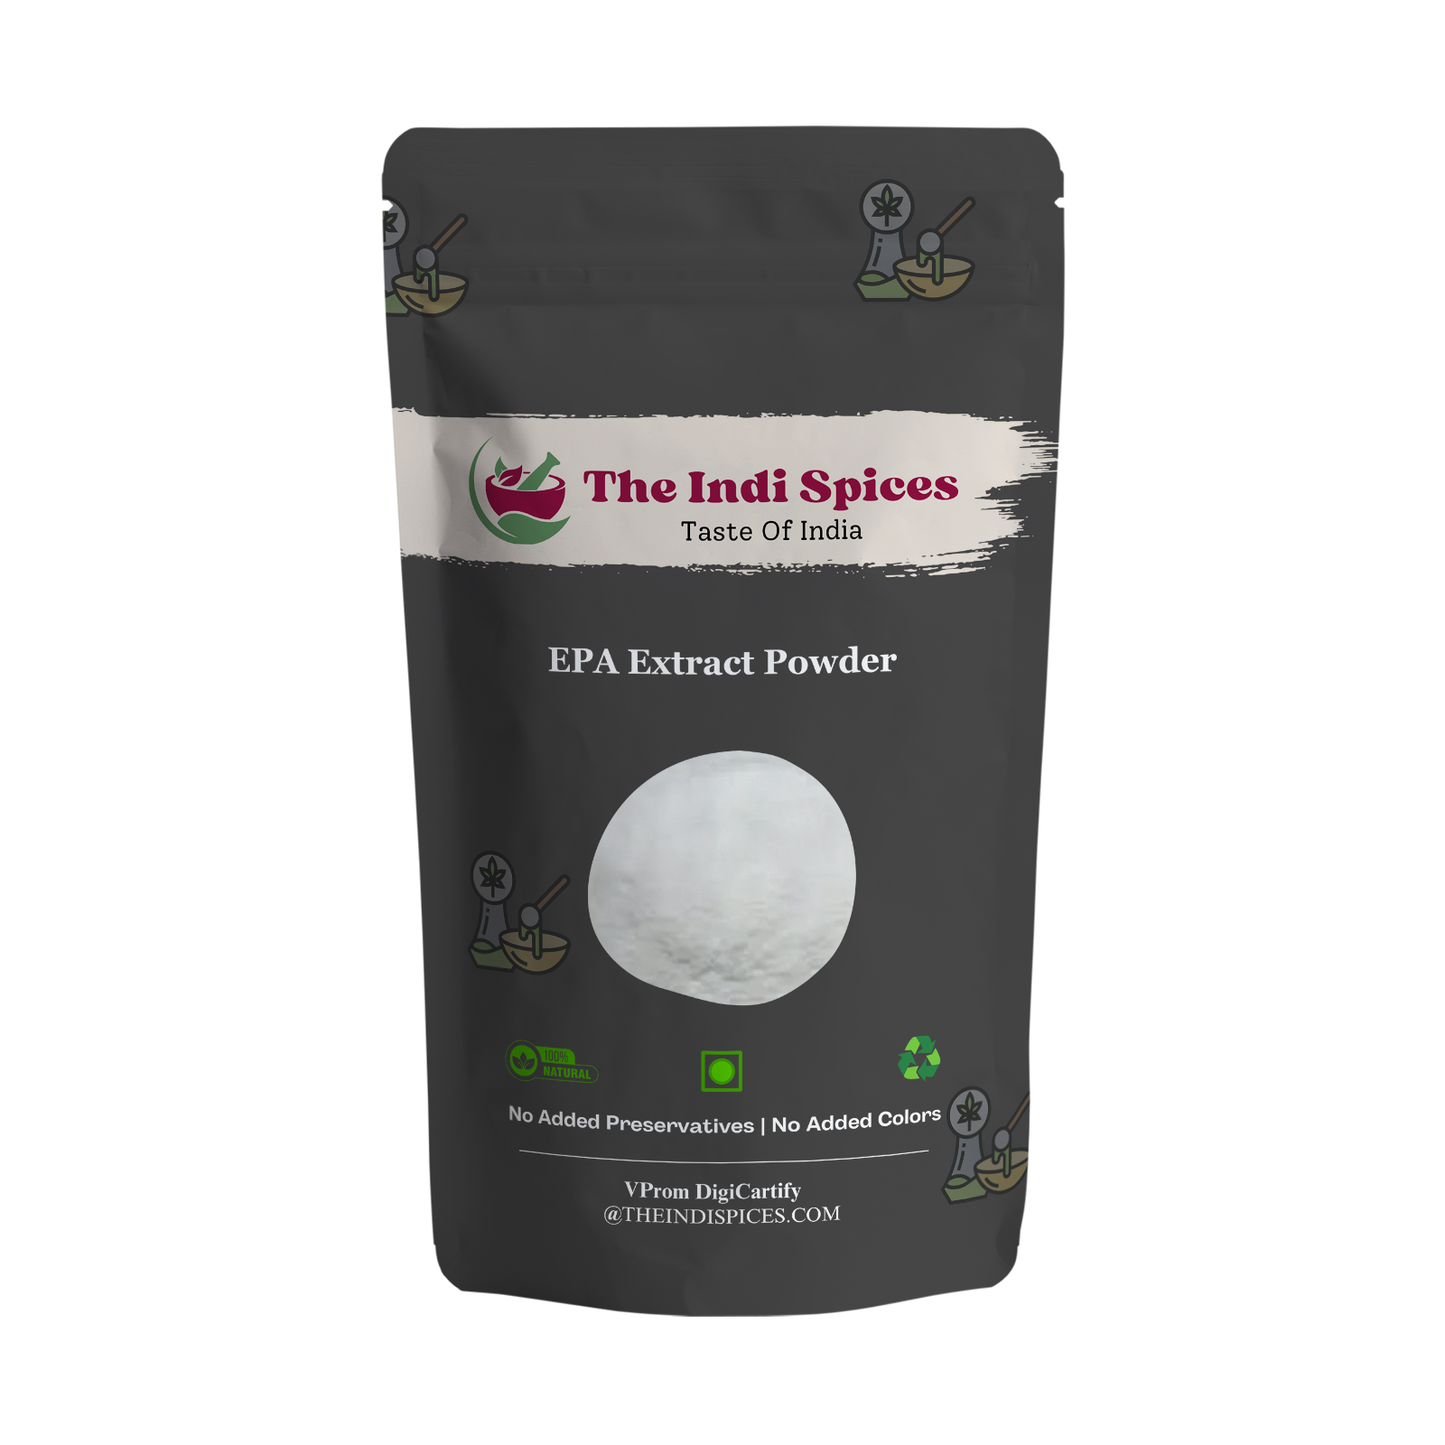 EPA Extract Powder